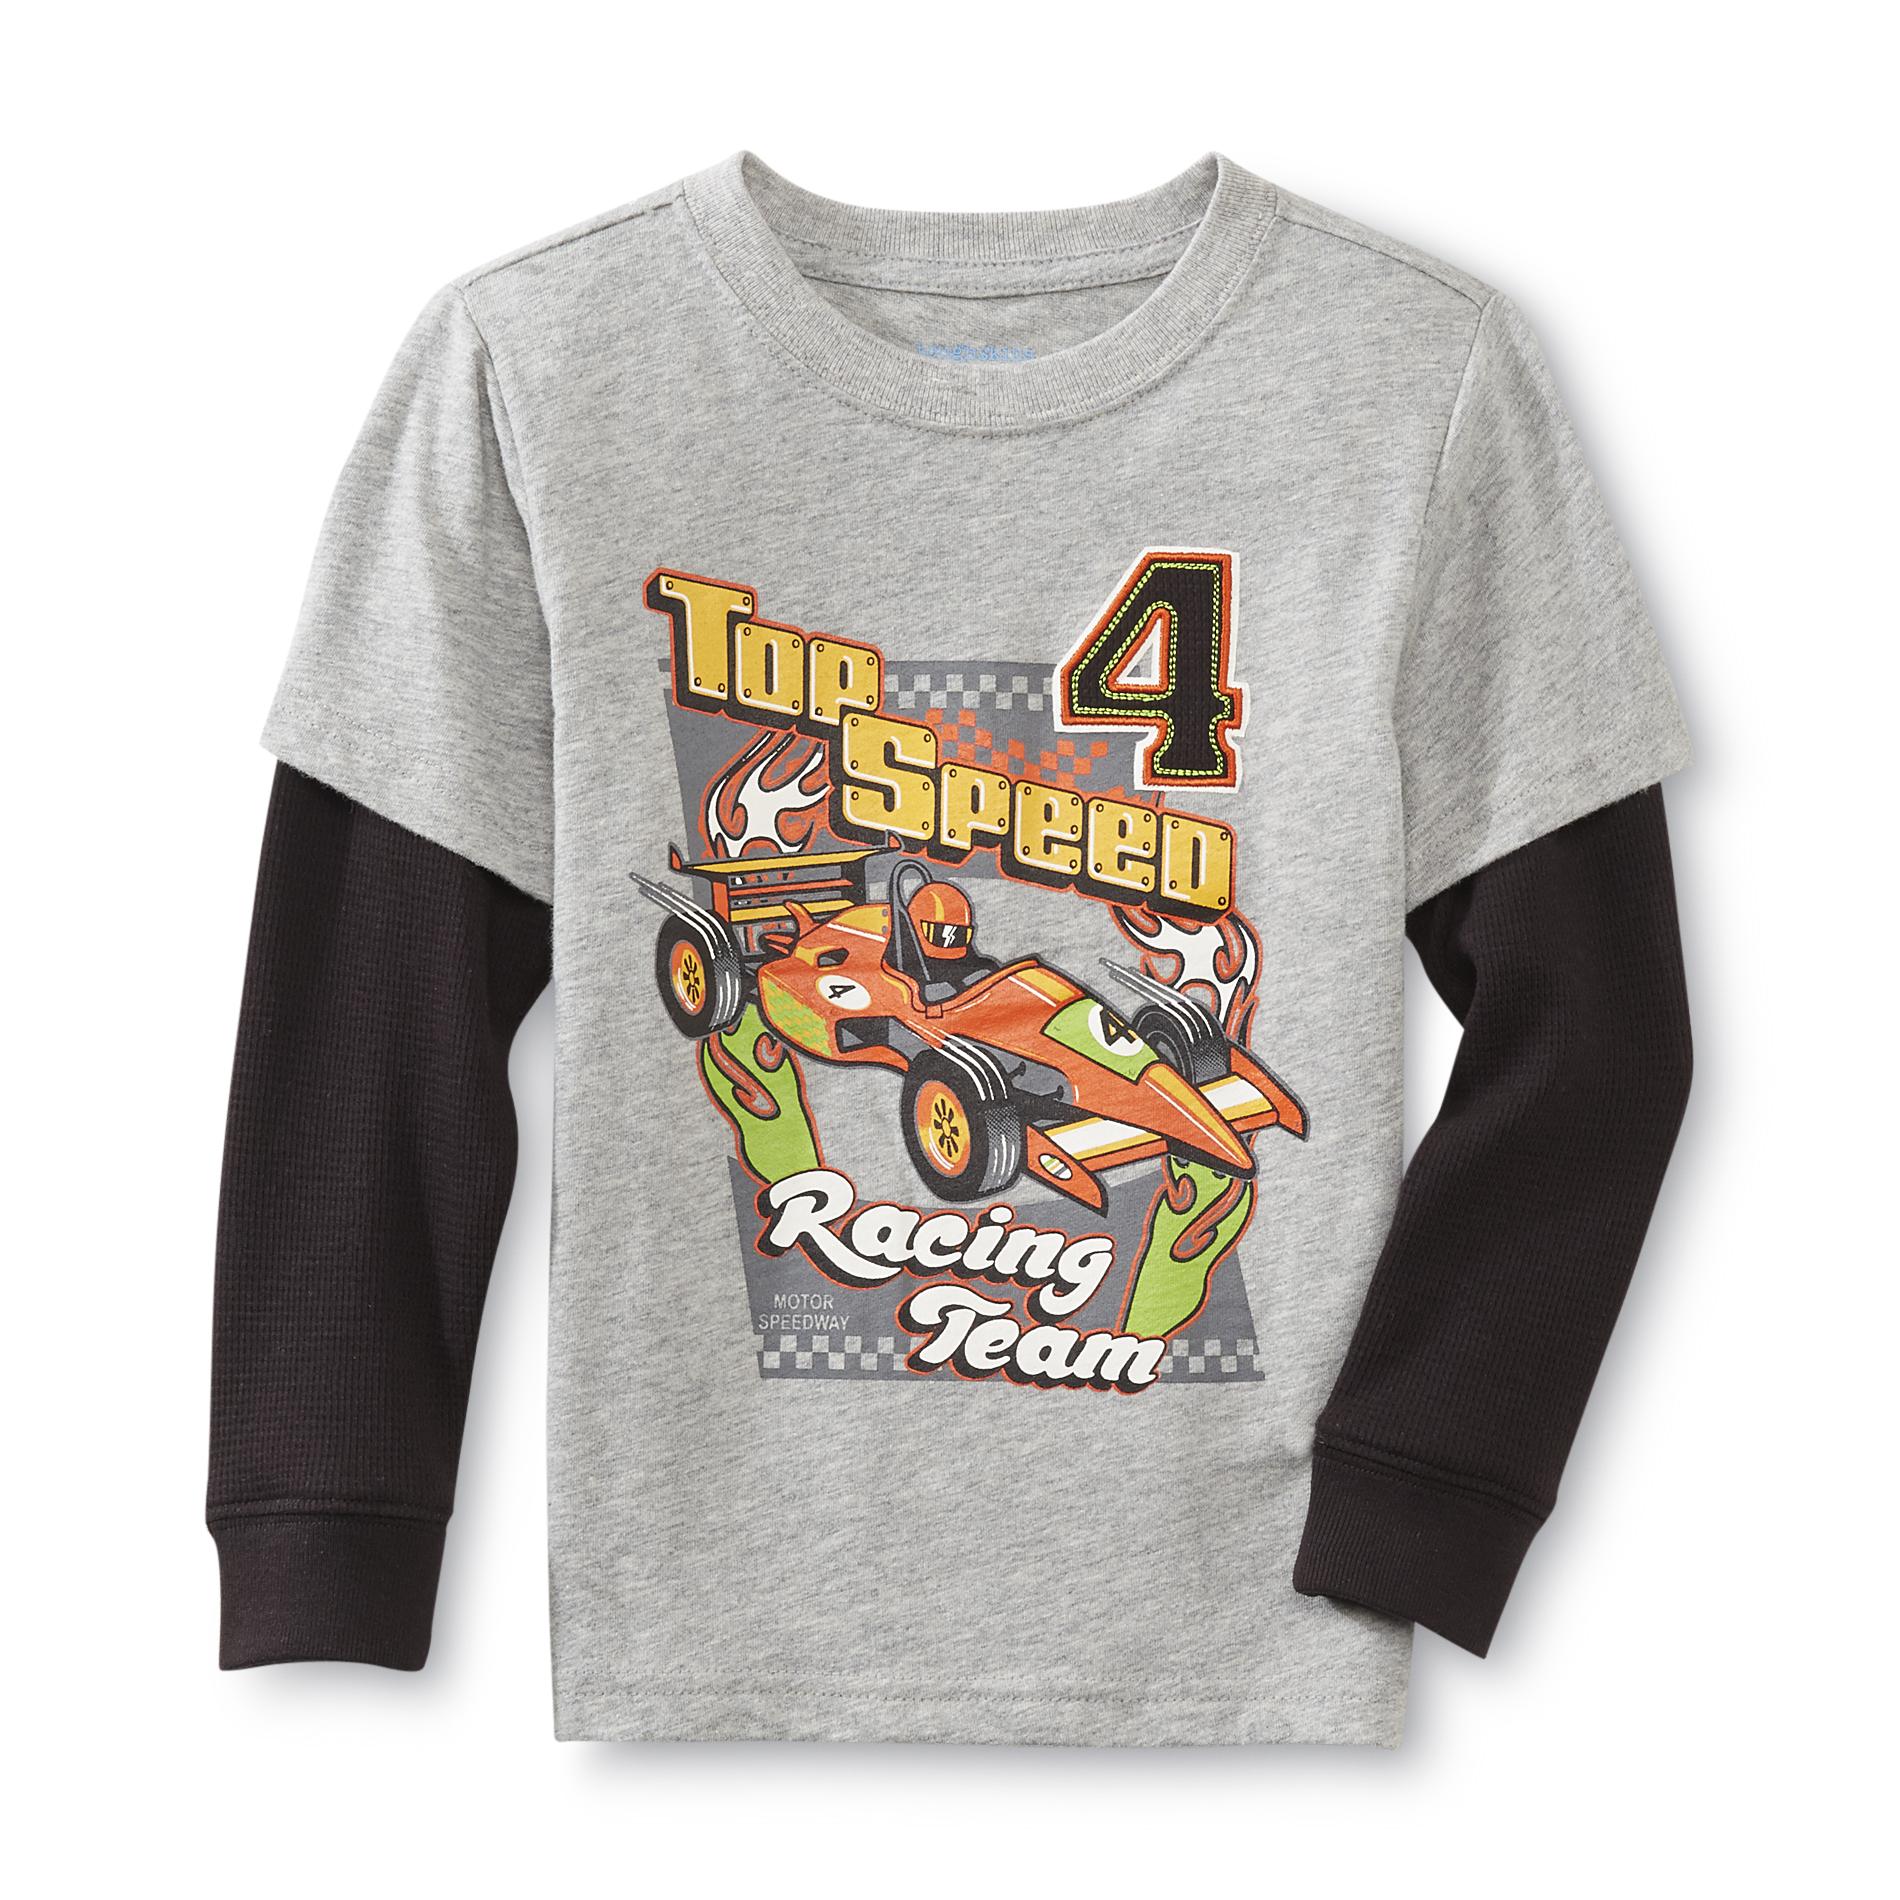 Toughskins Boy's Graphic T-Shirt - Race Car